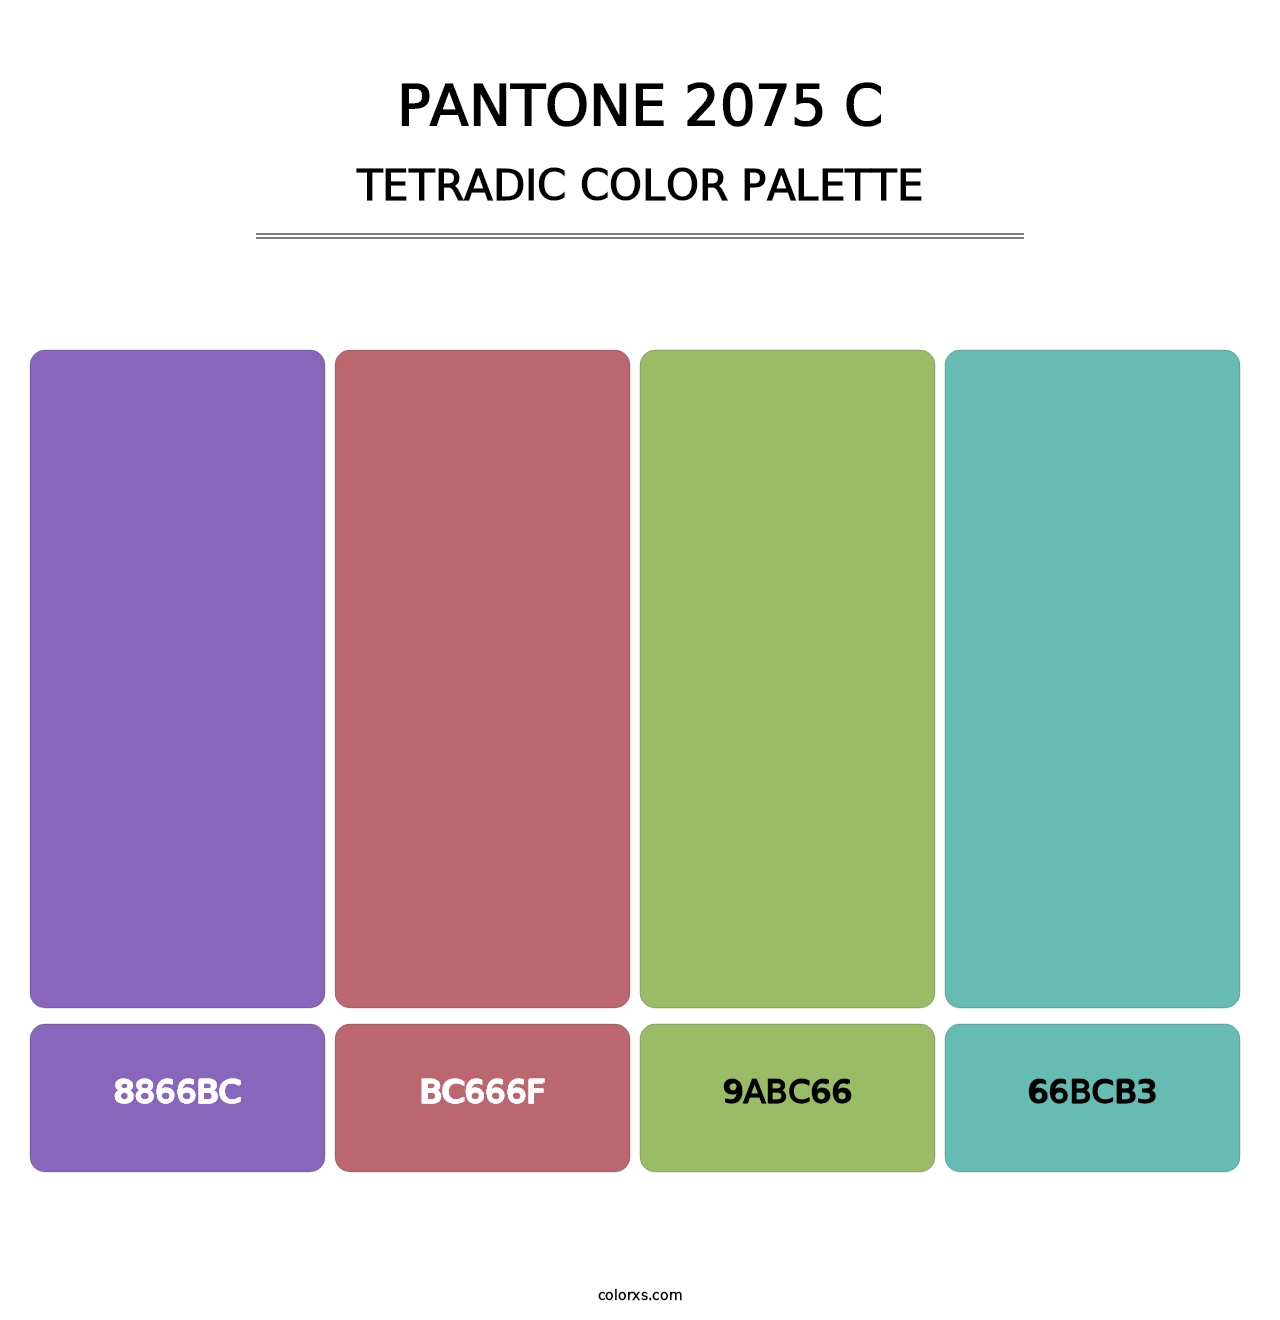 PANTONE 2075 C - Tetradic Color Palette